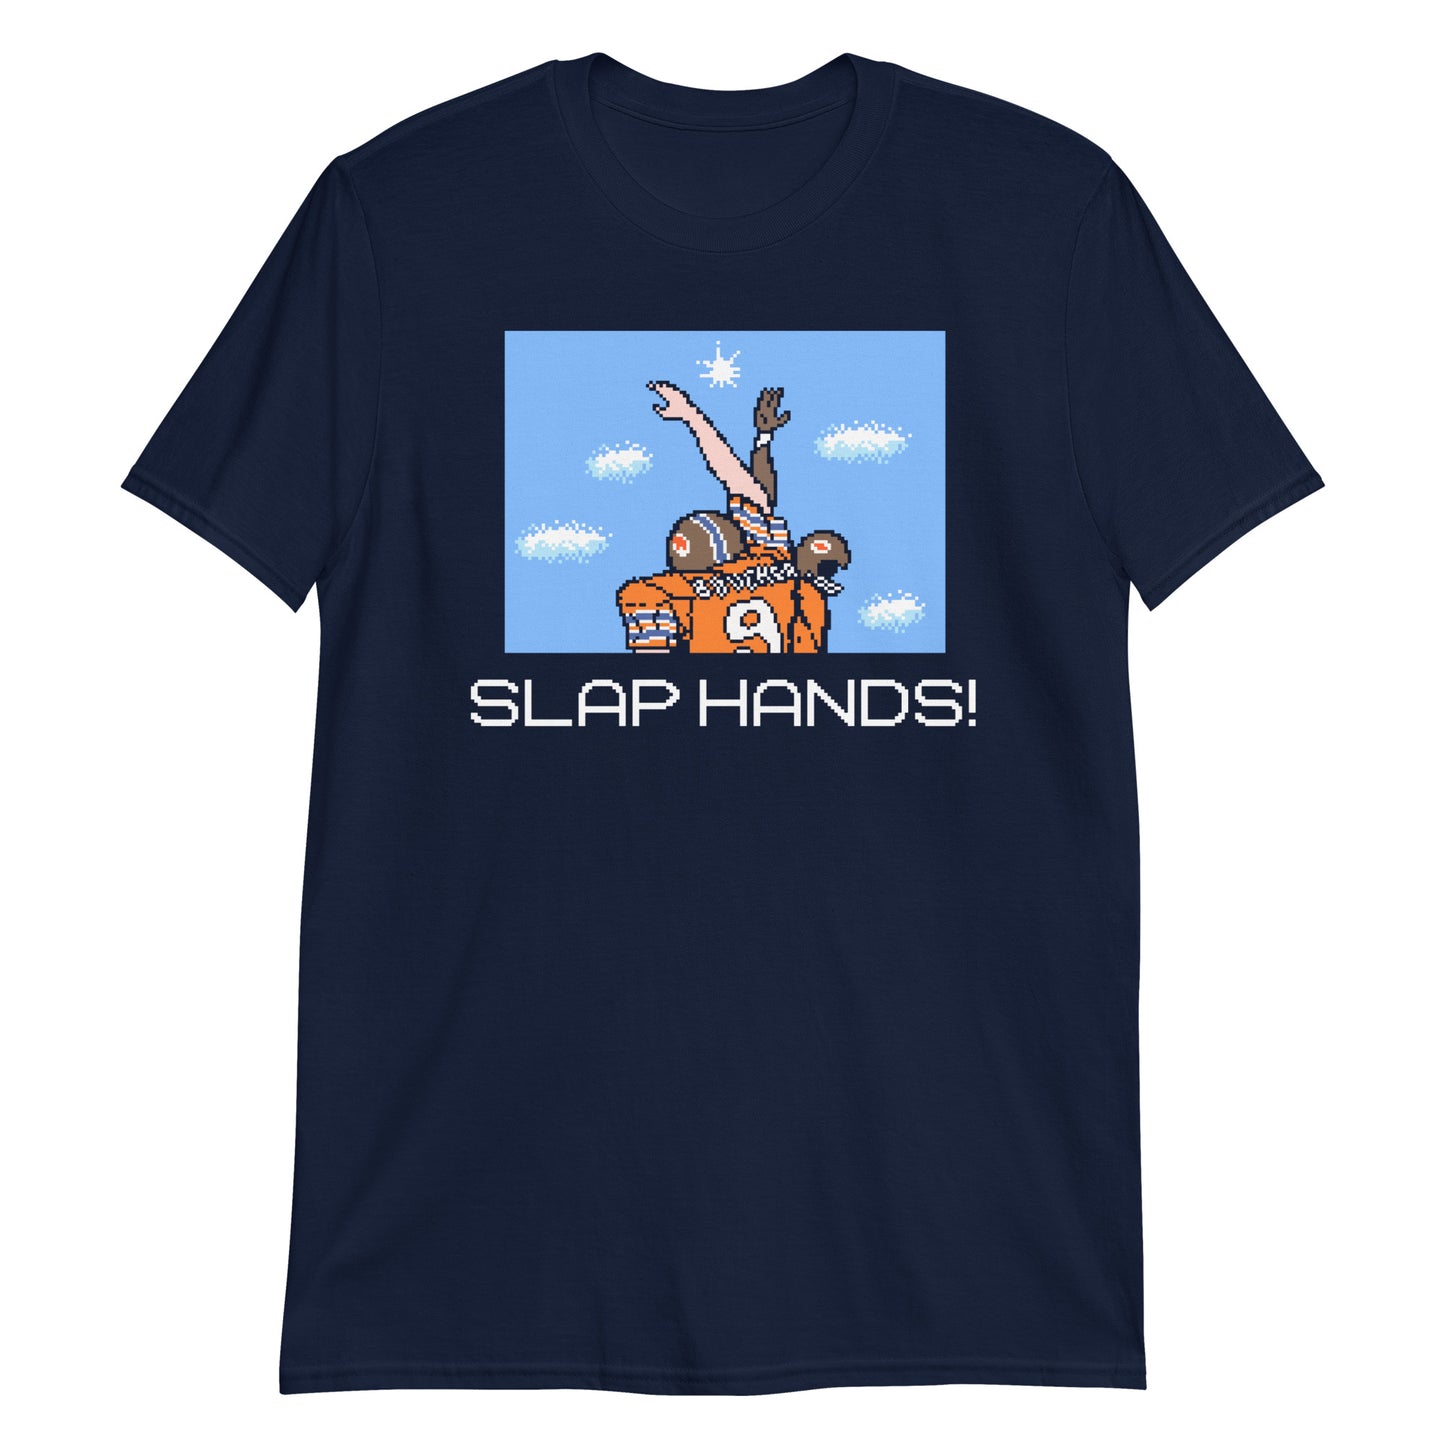 Slap Hands! t-shirt